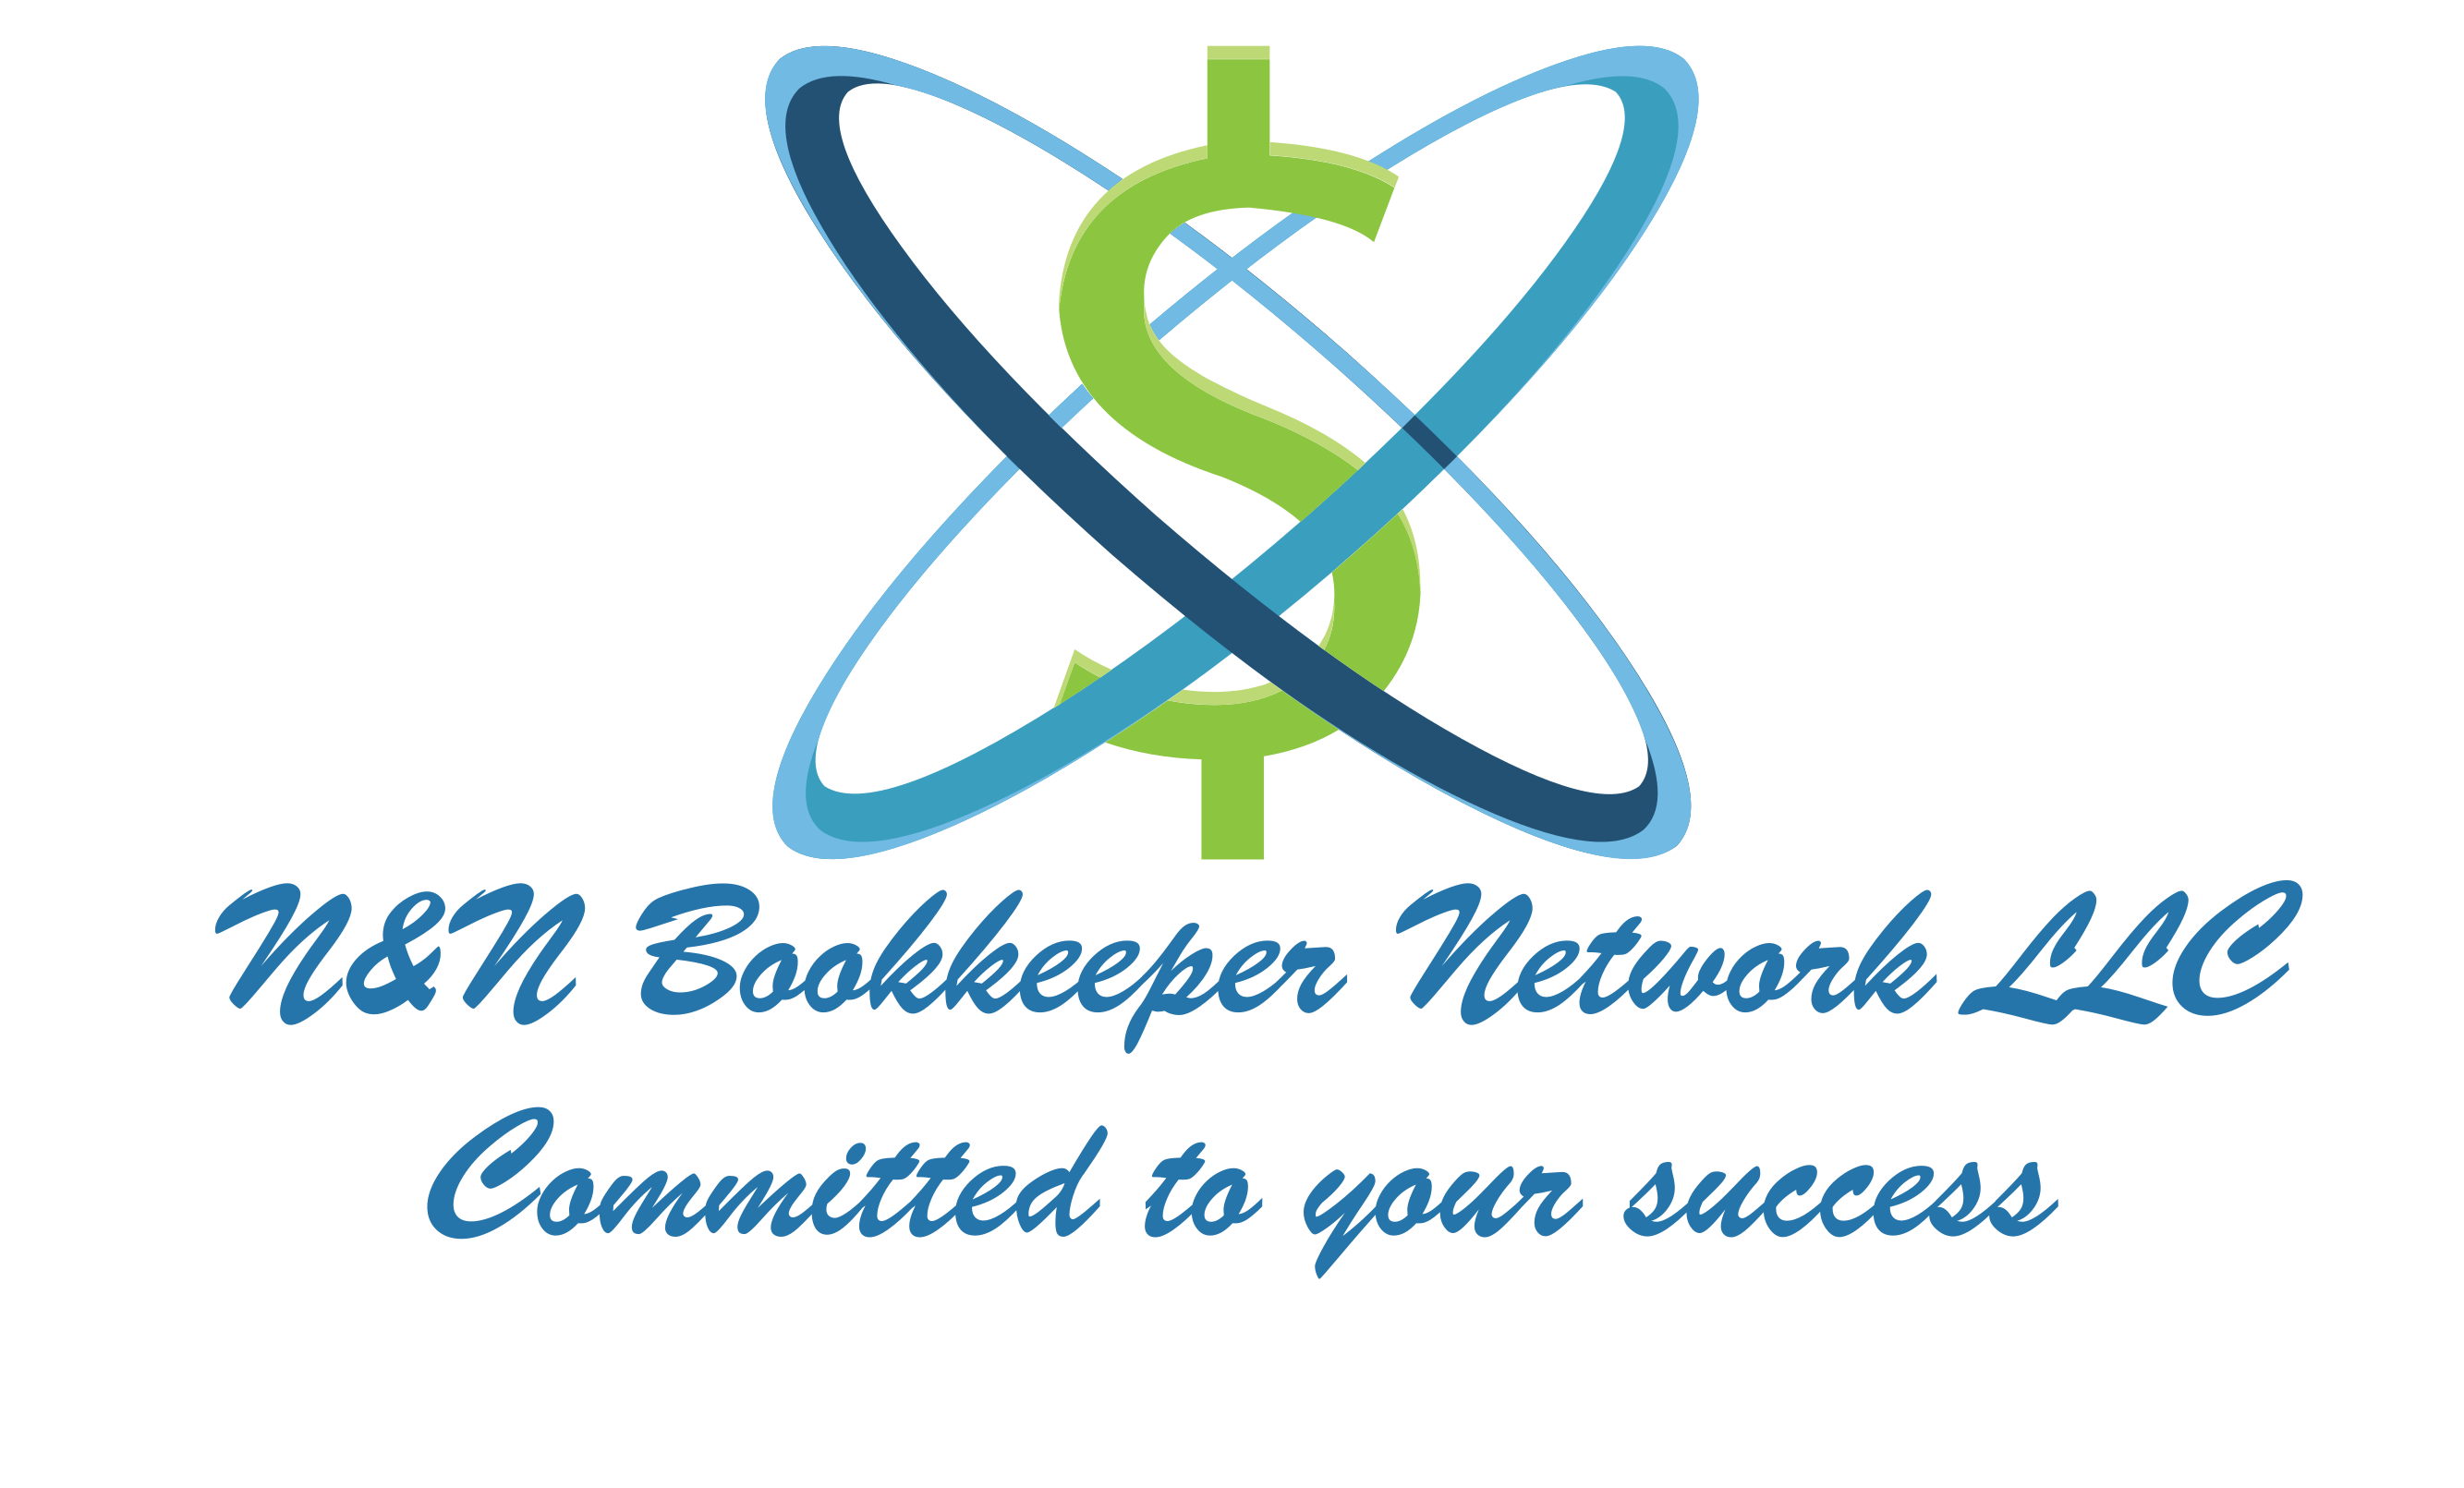 My Book Network